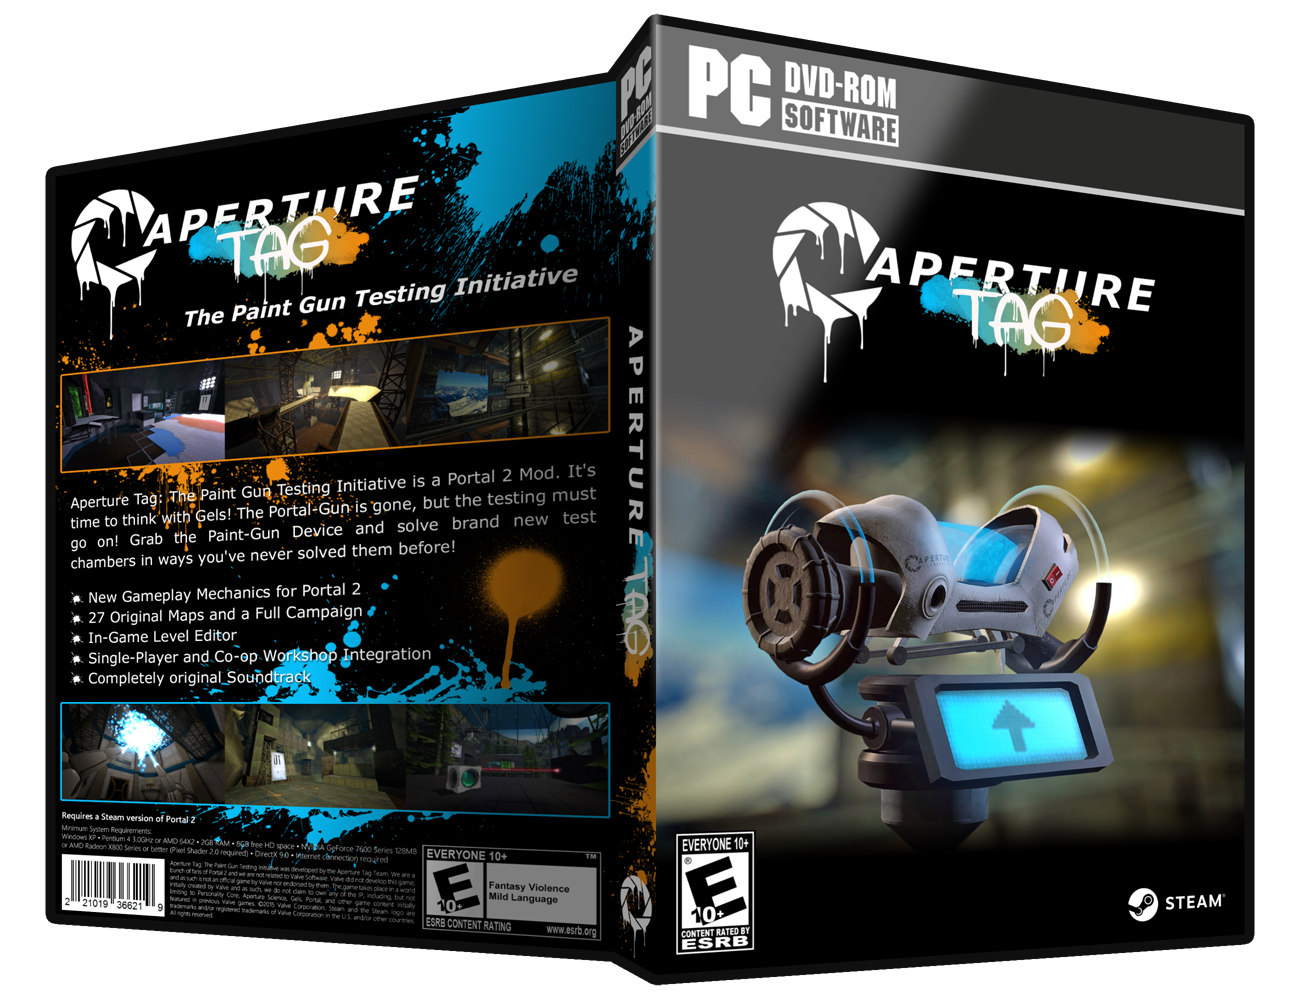 Aperture Tag: The Paint Gun Testing Initiative box cover